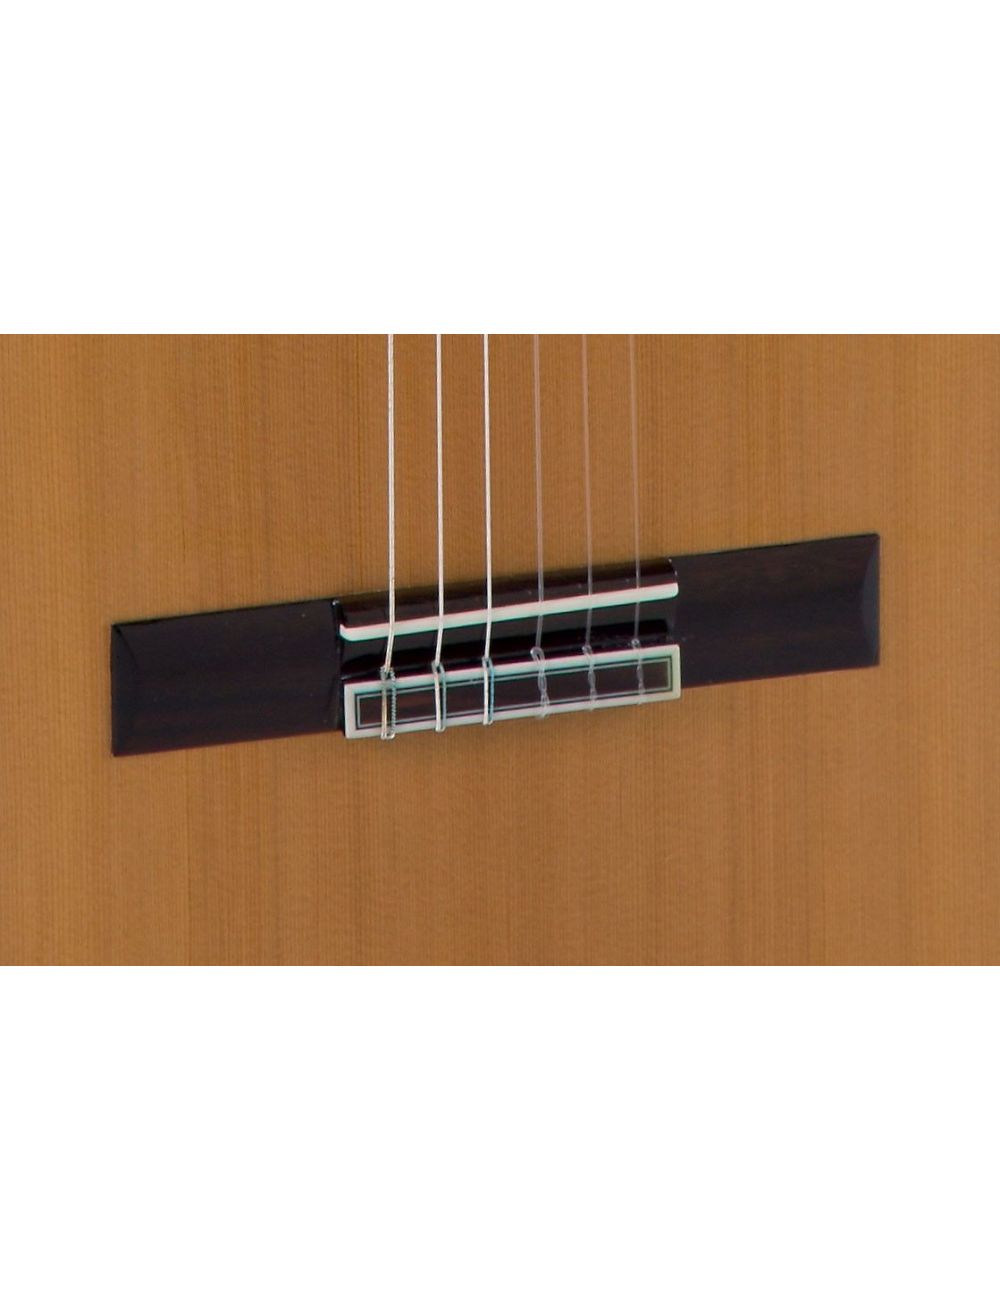 Admira A10 EF Electro Classical guitar ADM10EF Electro-Classical